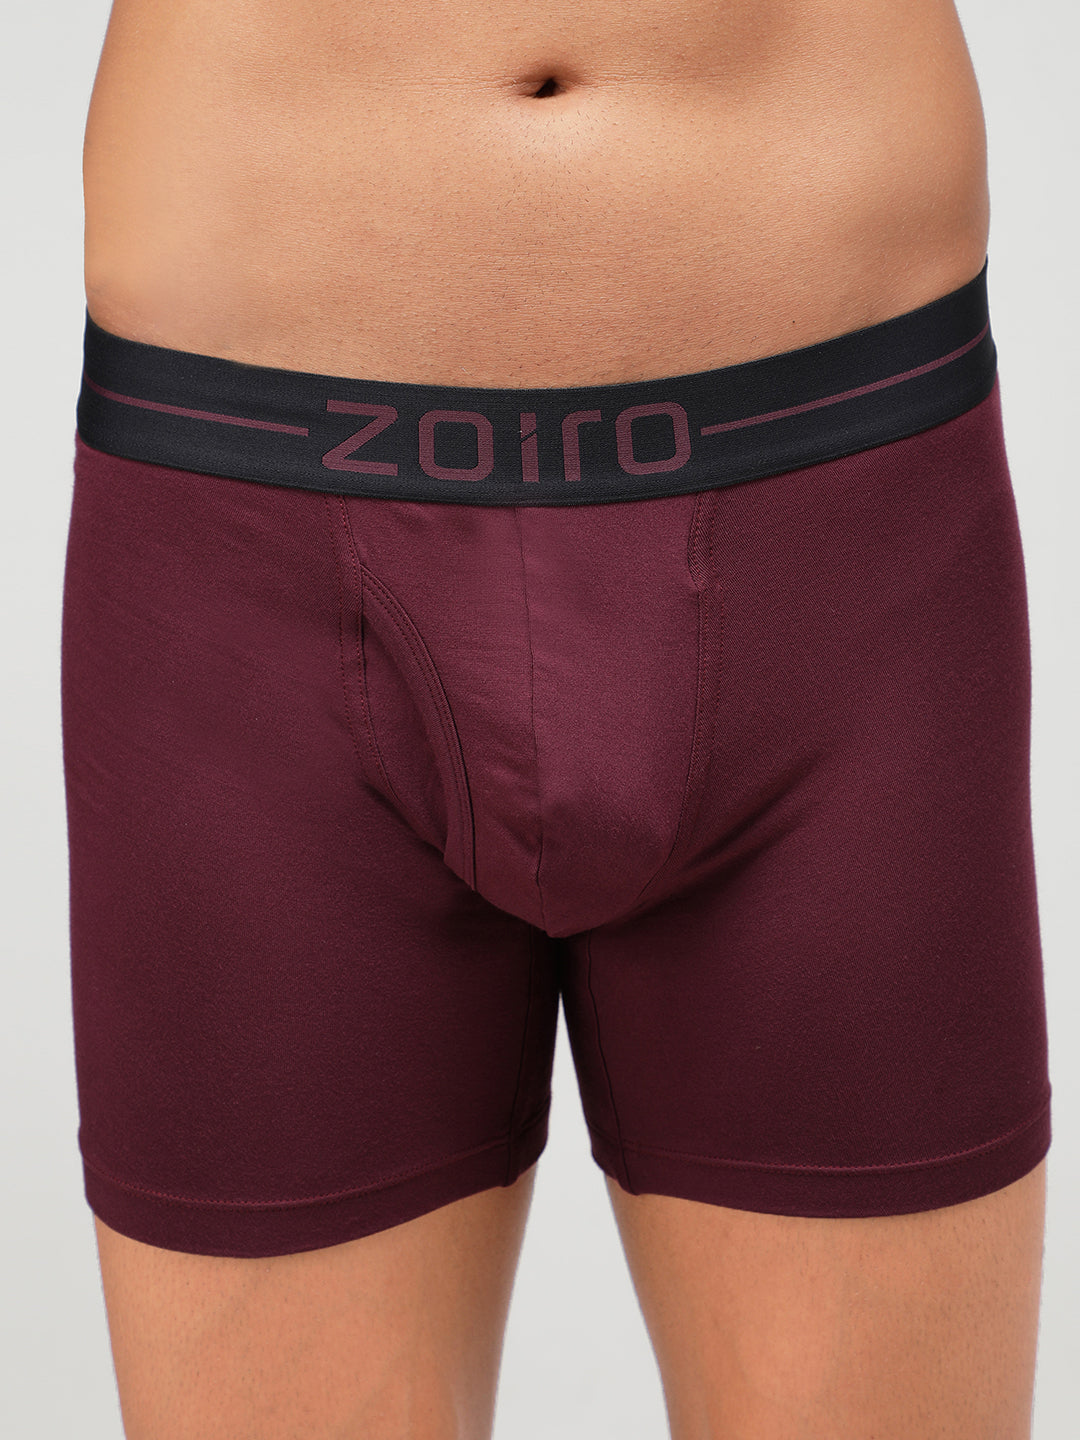 Zoiro Men&#39;s Modal Softs Solid Long Trunk - Port Wine